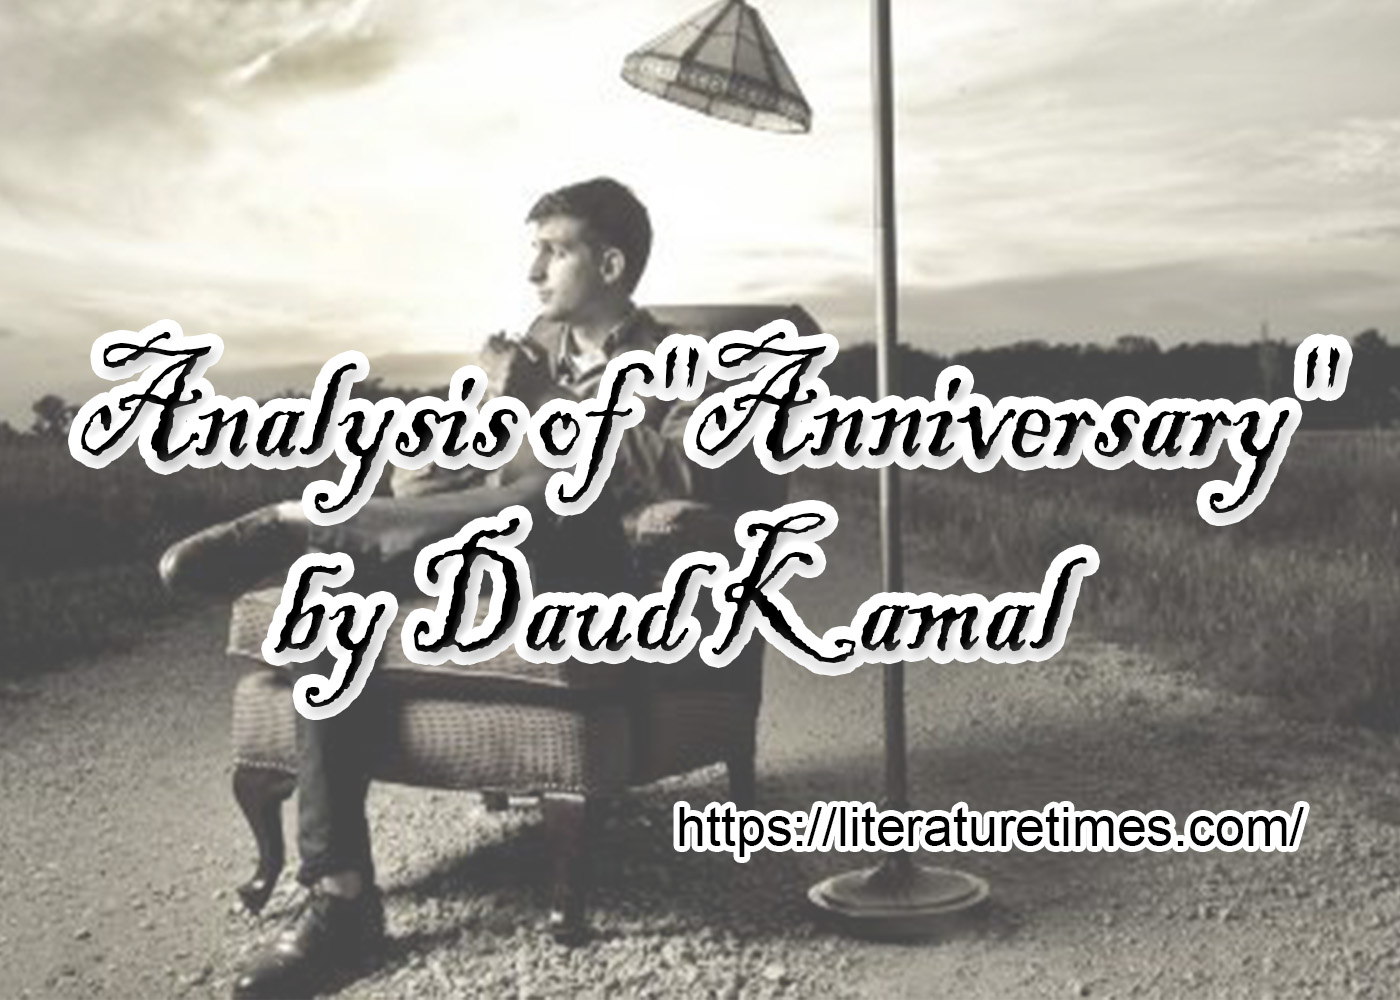 Analysis of "Anniversary" by Daud Kamal